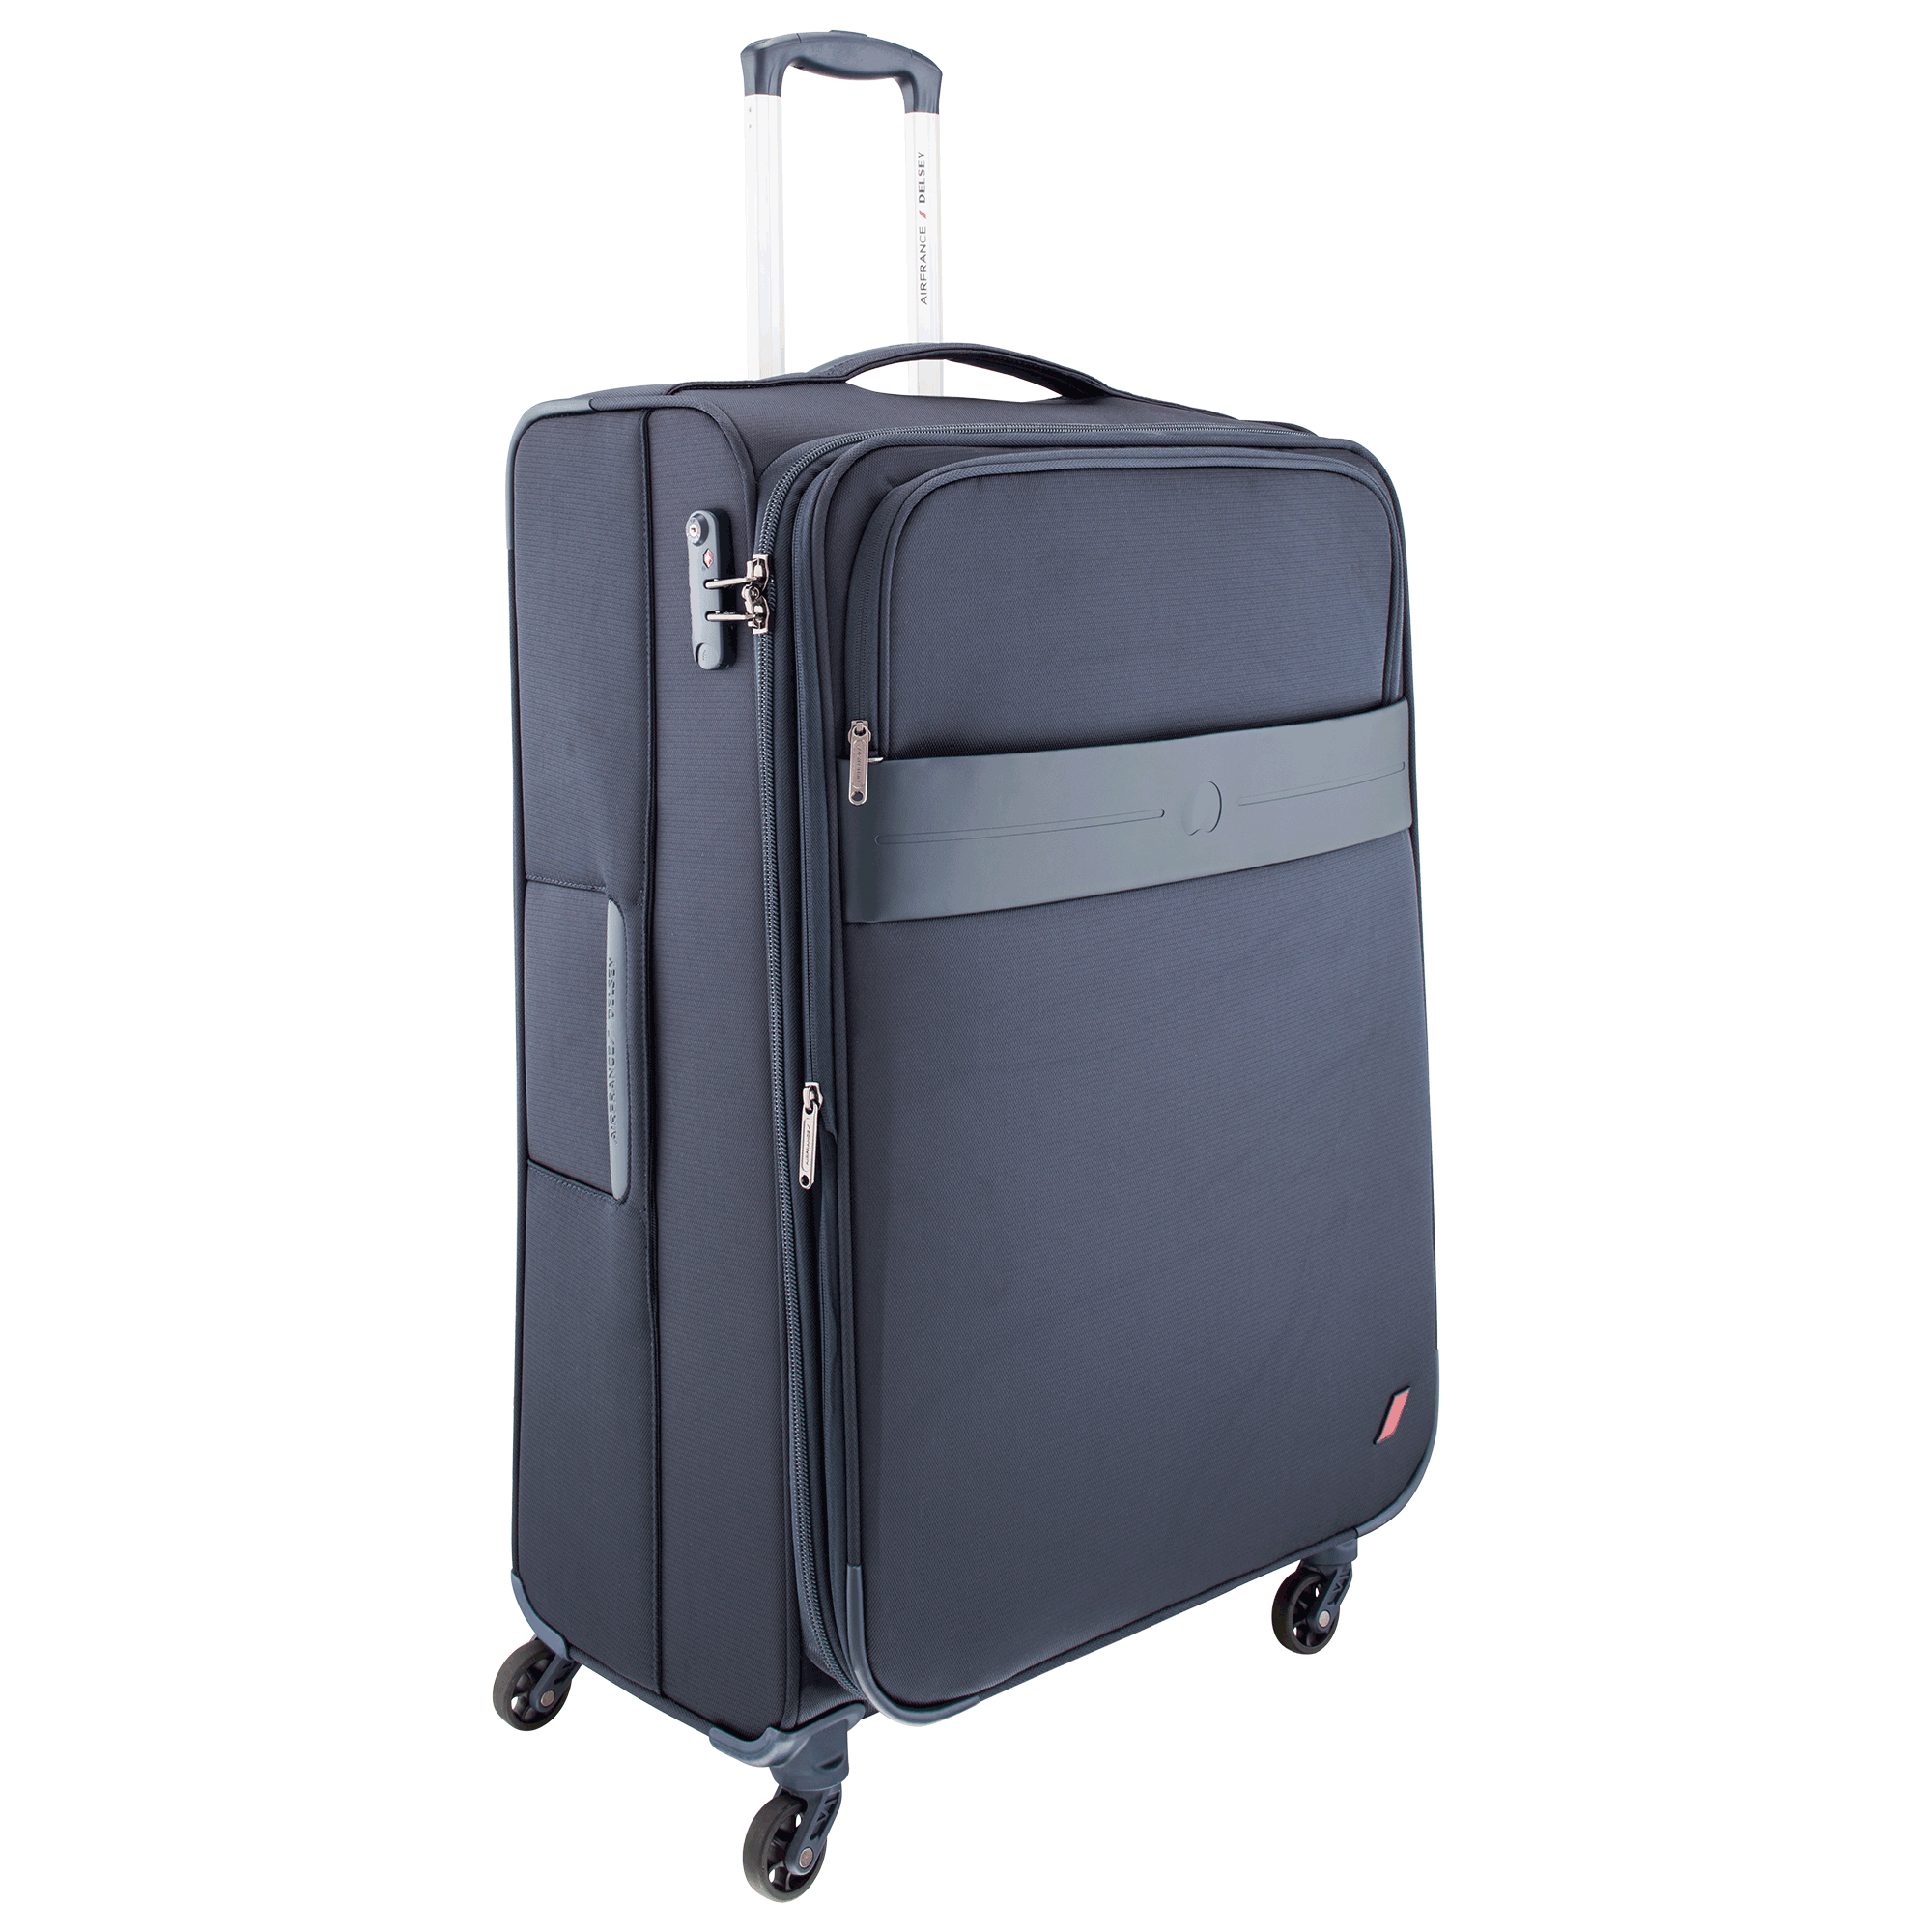 Blue luggage PNG image